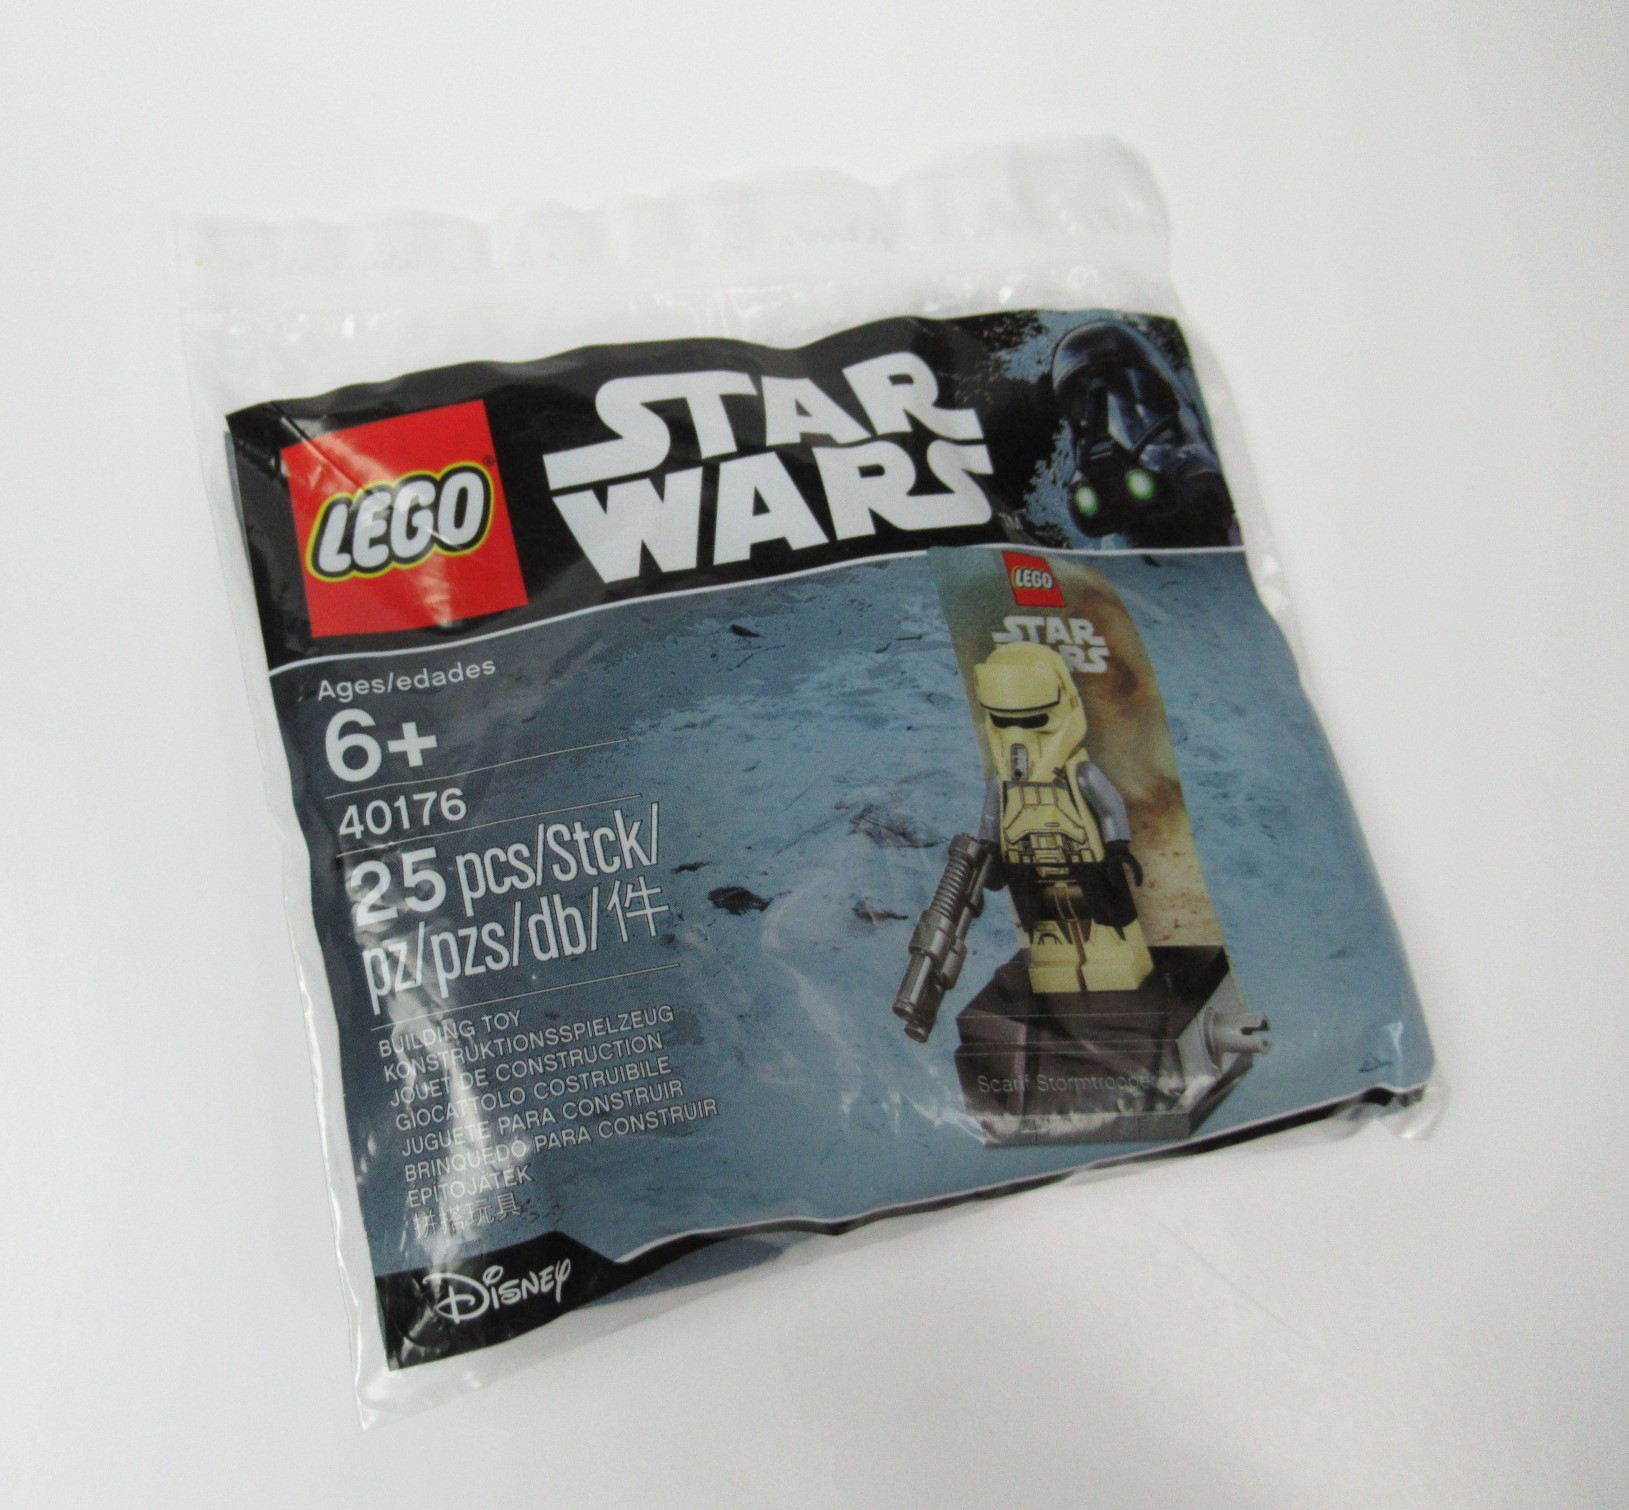 Resmi LEGO® Star Wars 40176 Star Wars Scarif Stormtrooper Polybag